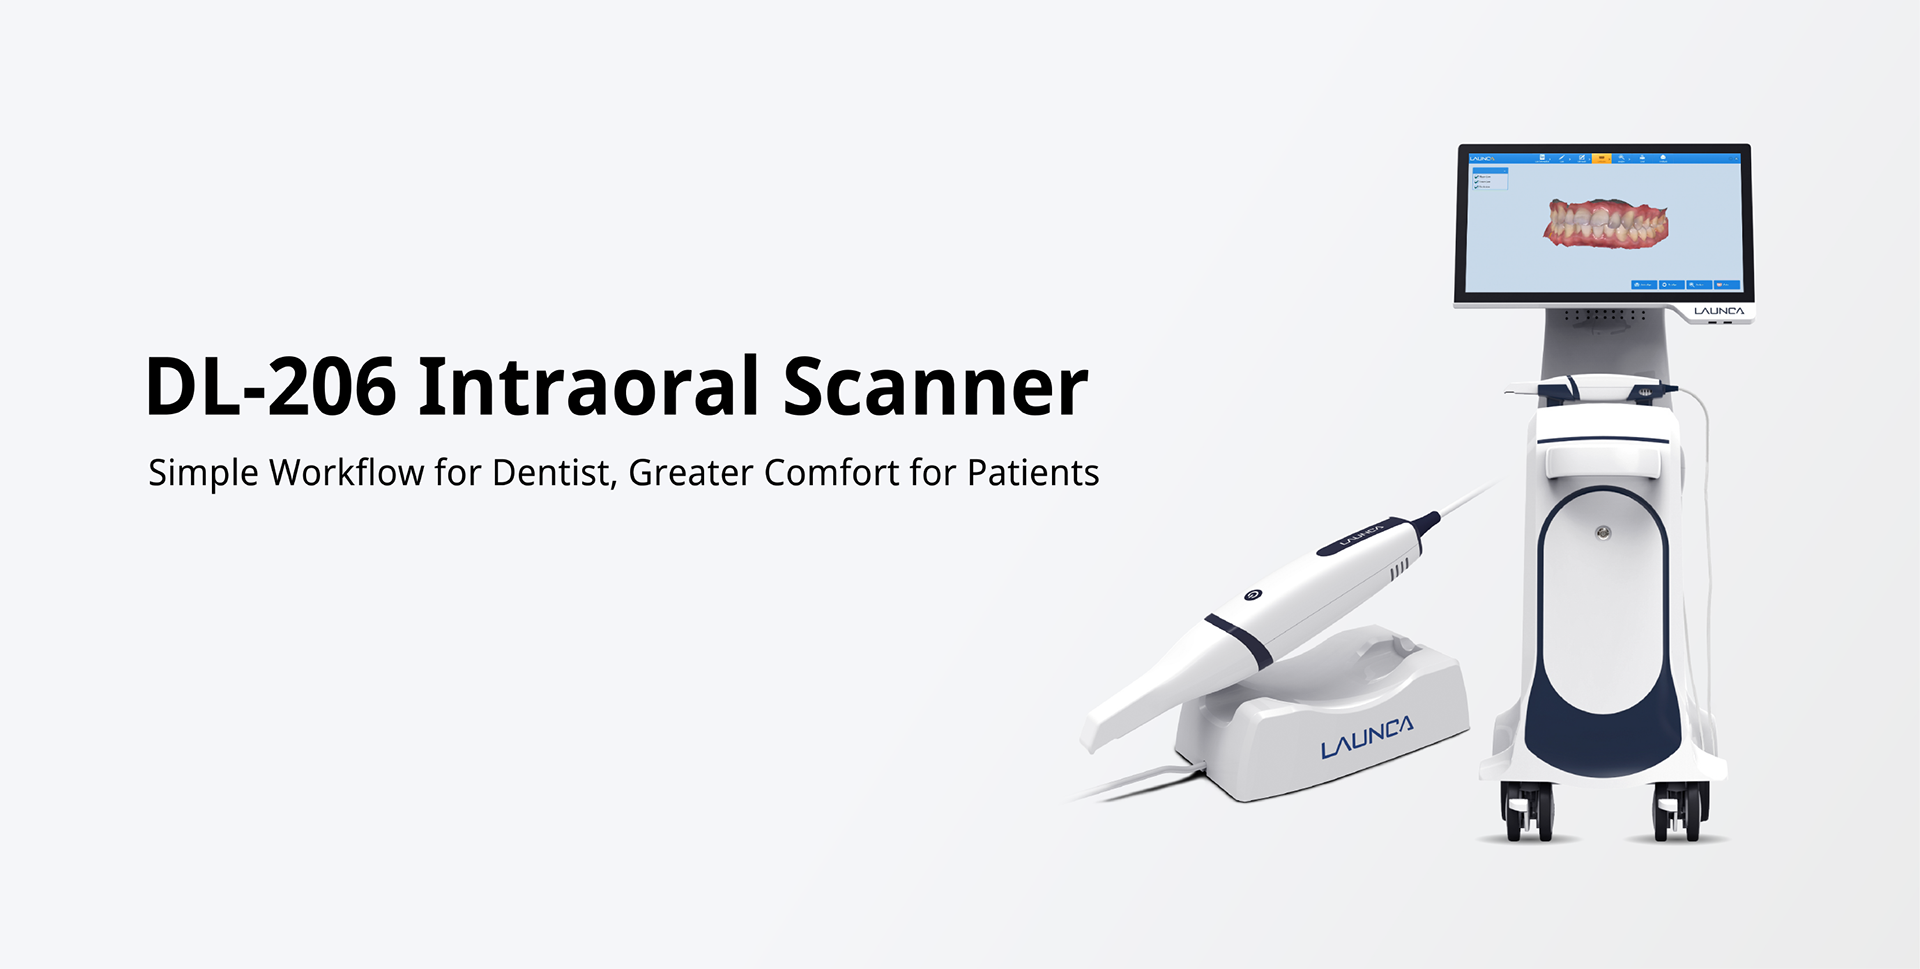 LAUNCA DL-206 Intraoral Scanner